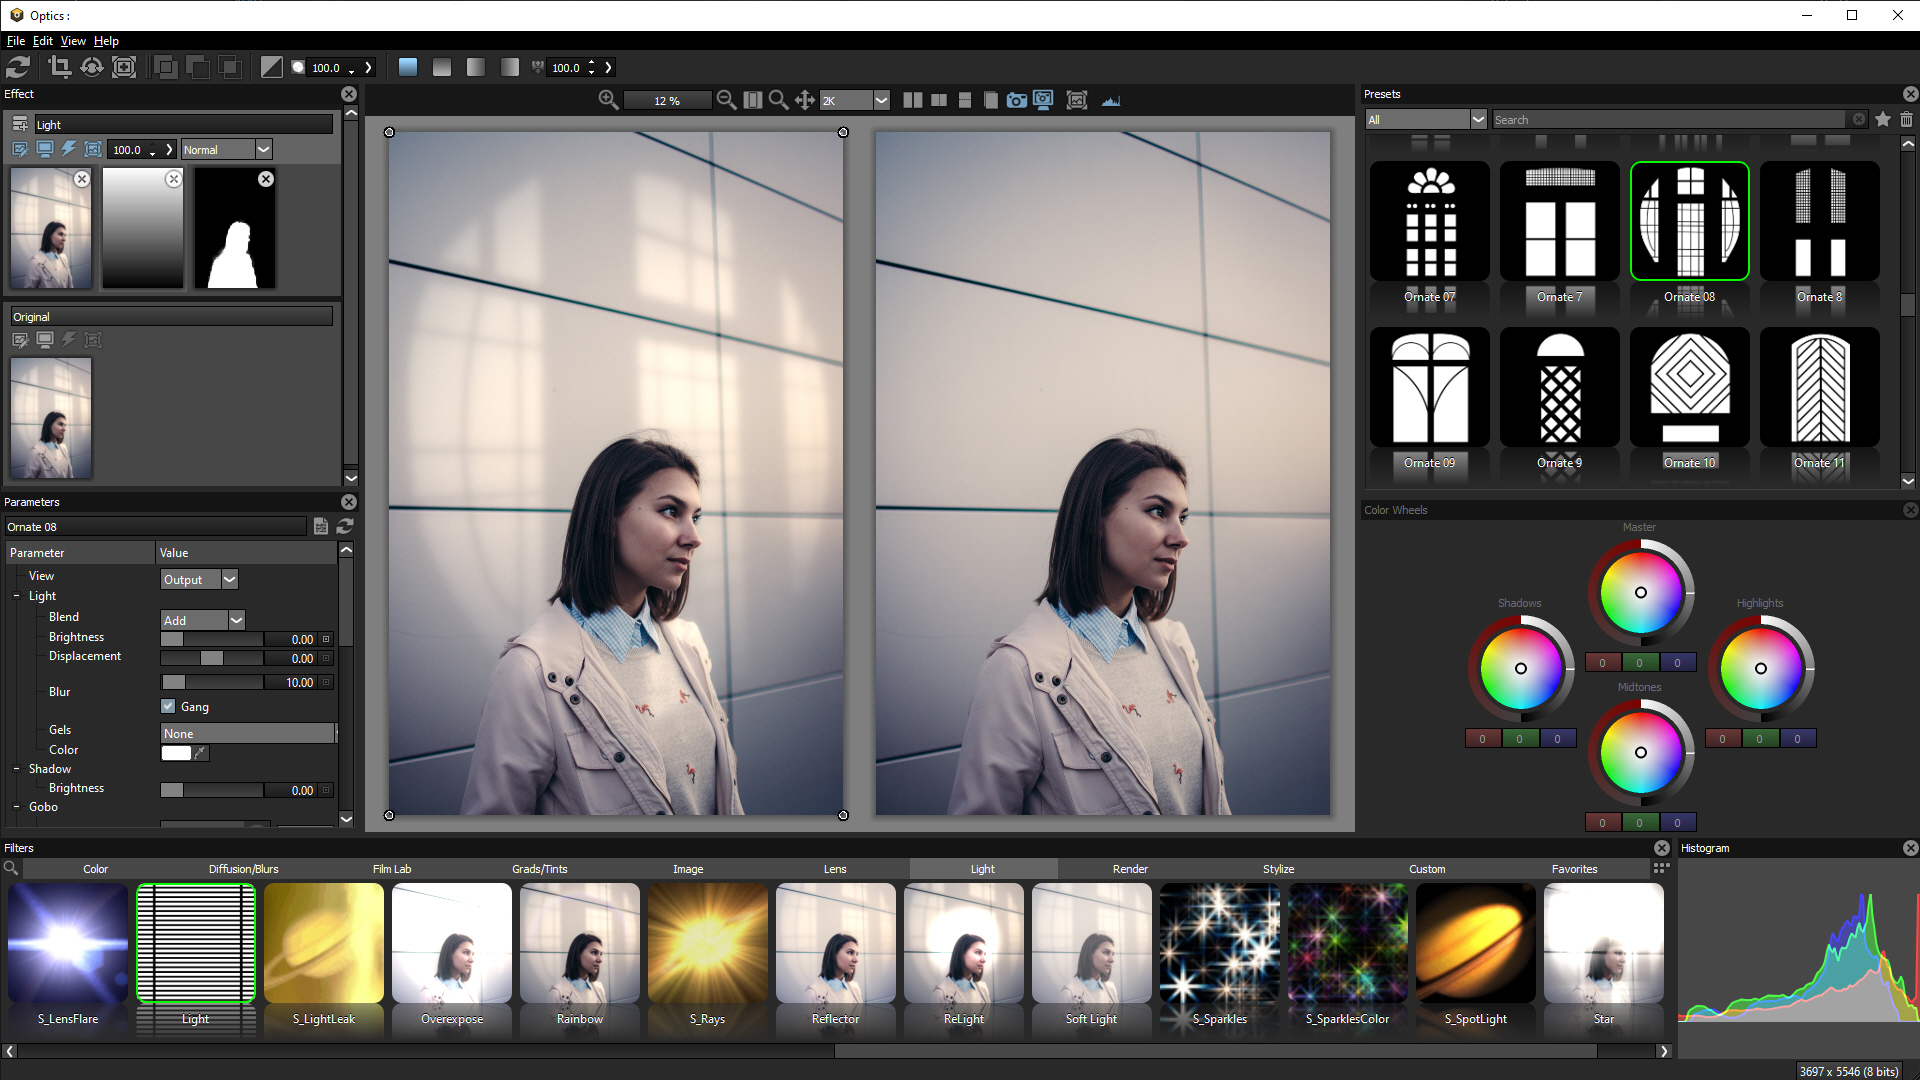 Boris FX Optics interface for Adobe Photoshop